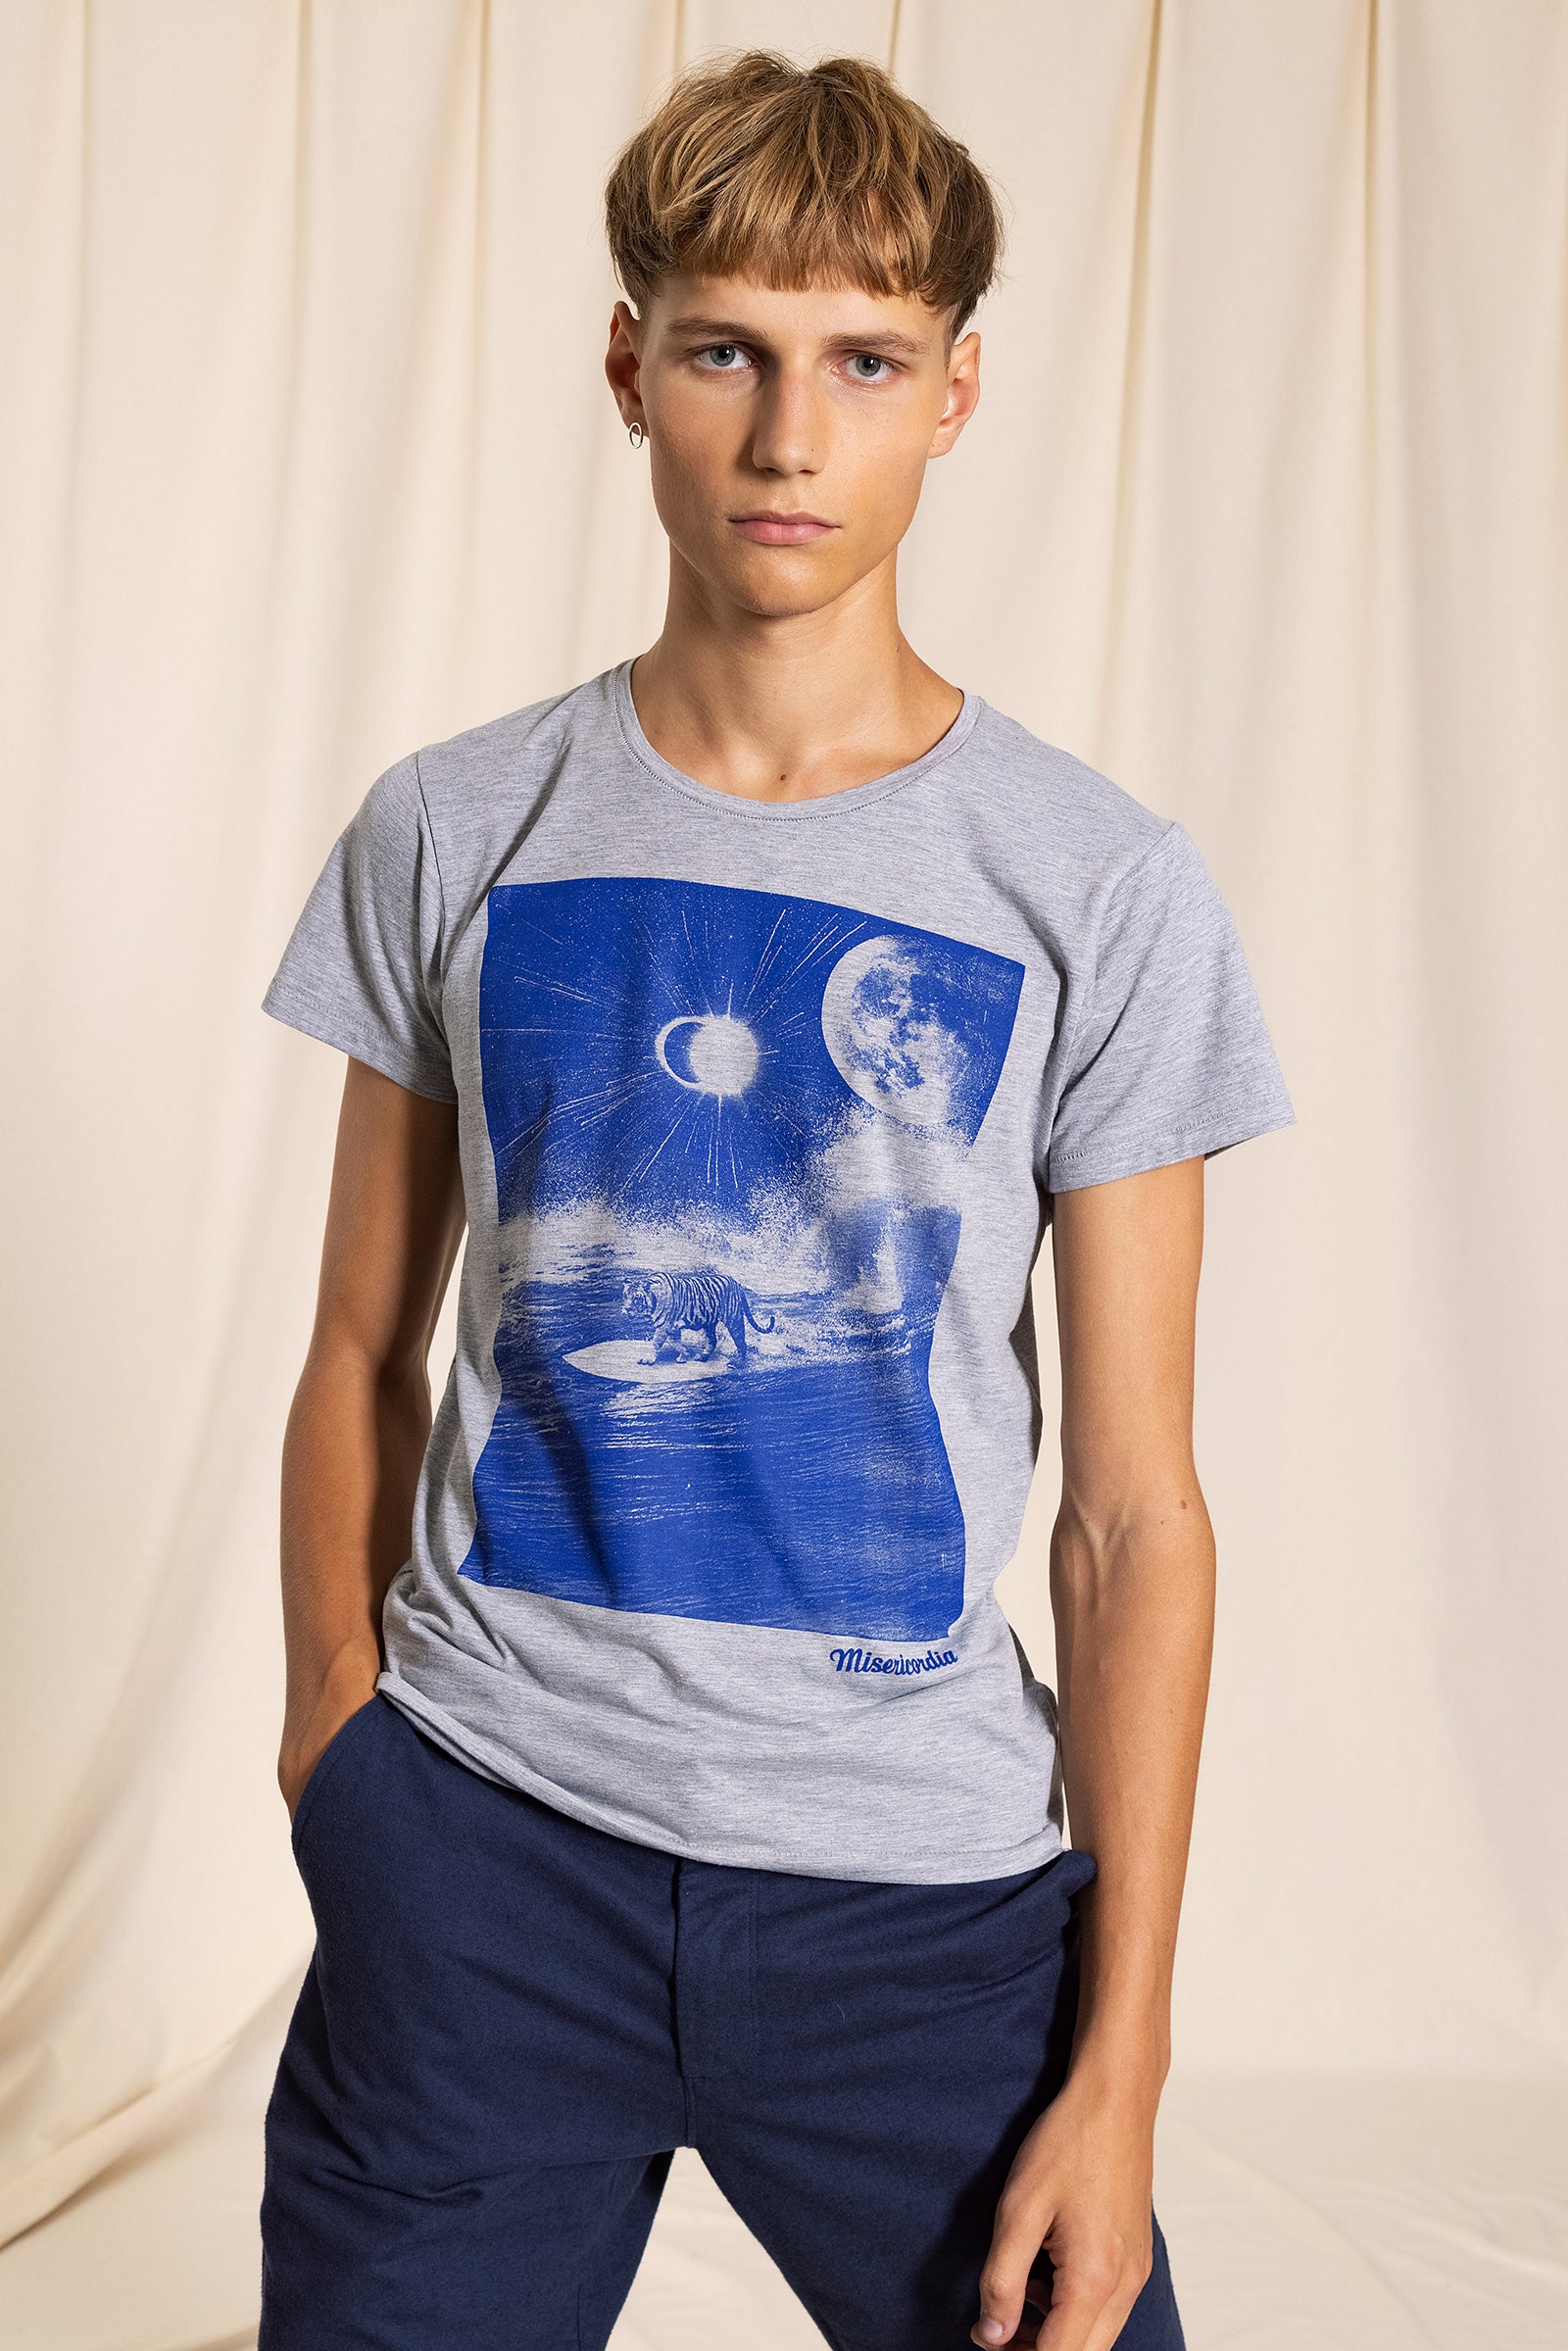 T-shirt Homme imprimé bleu gris tigre surf mer océan lune vagues rayures animal original 